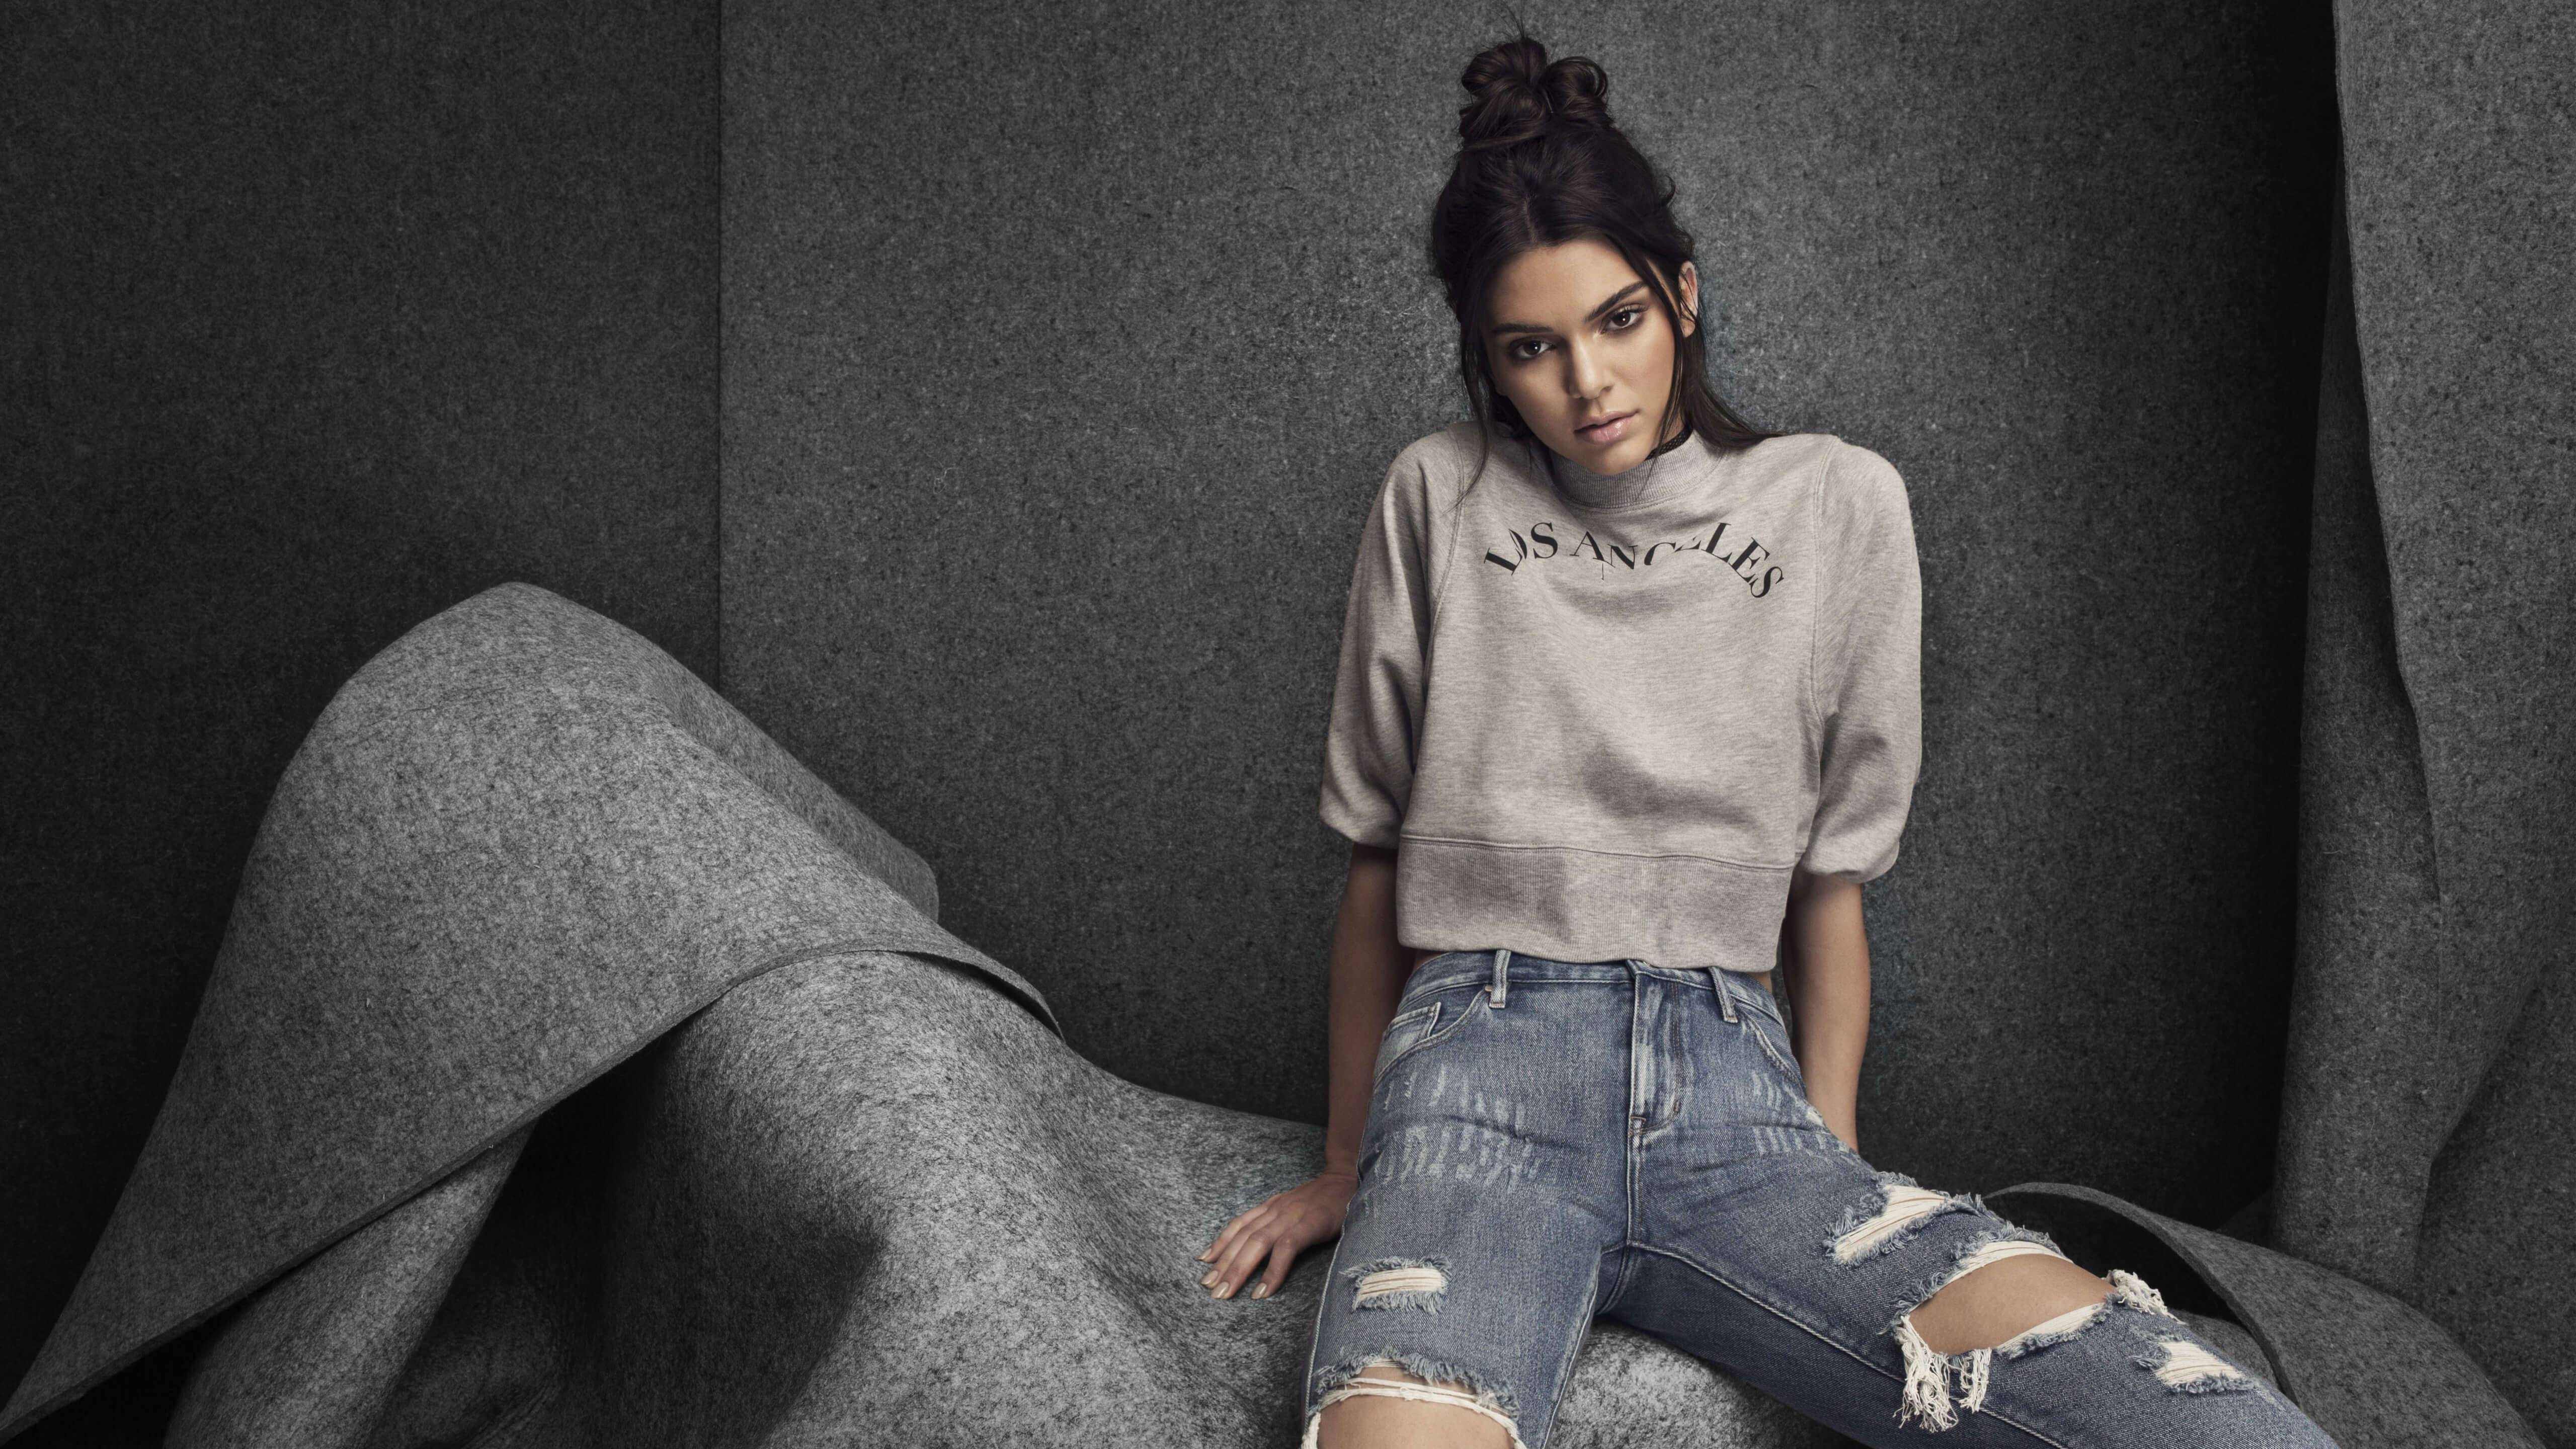 Kendall Jenner 2021 HD Model Wallpapers